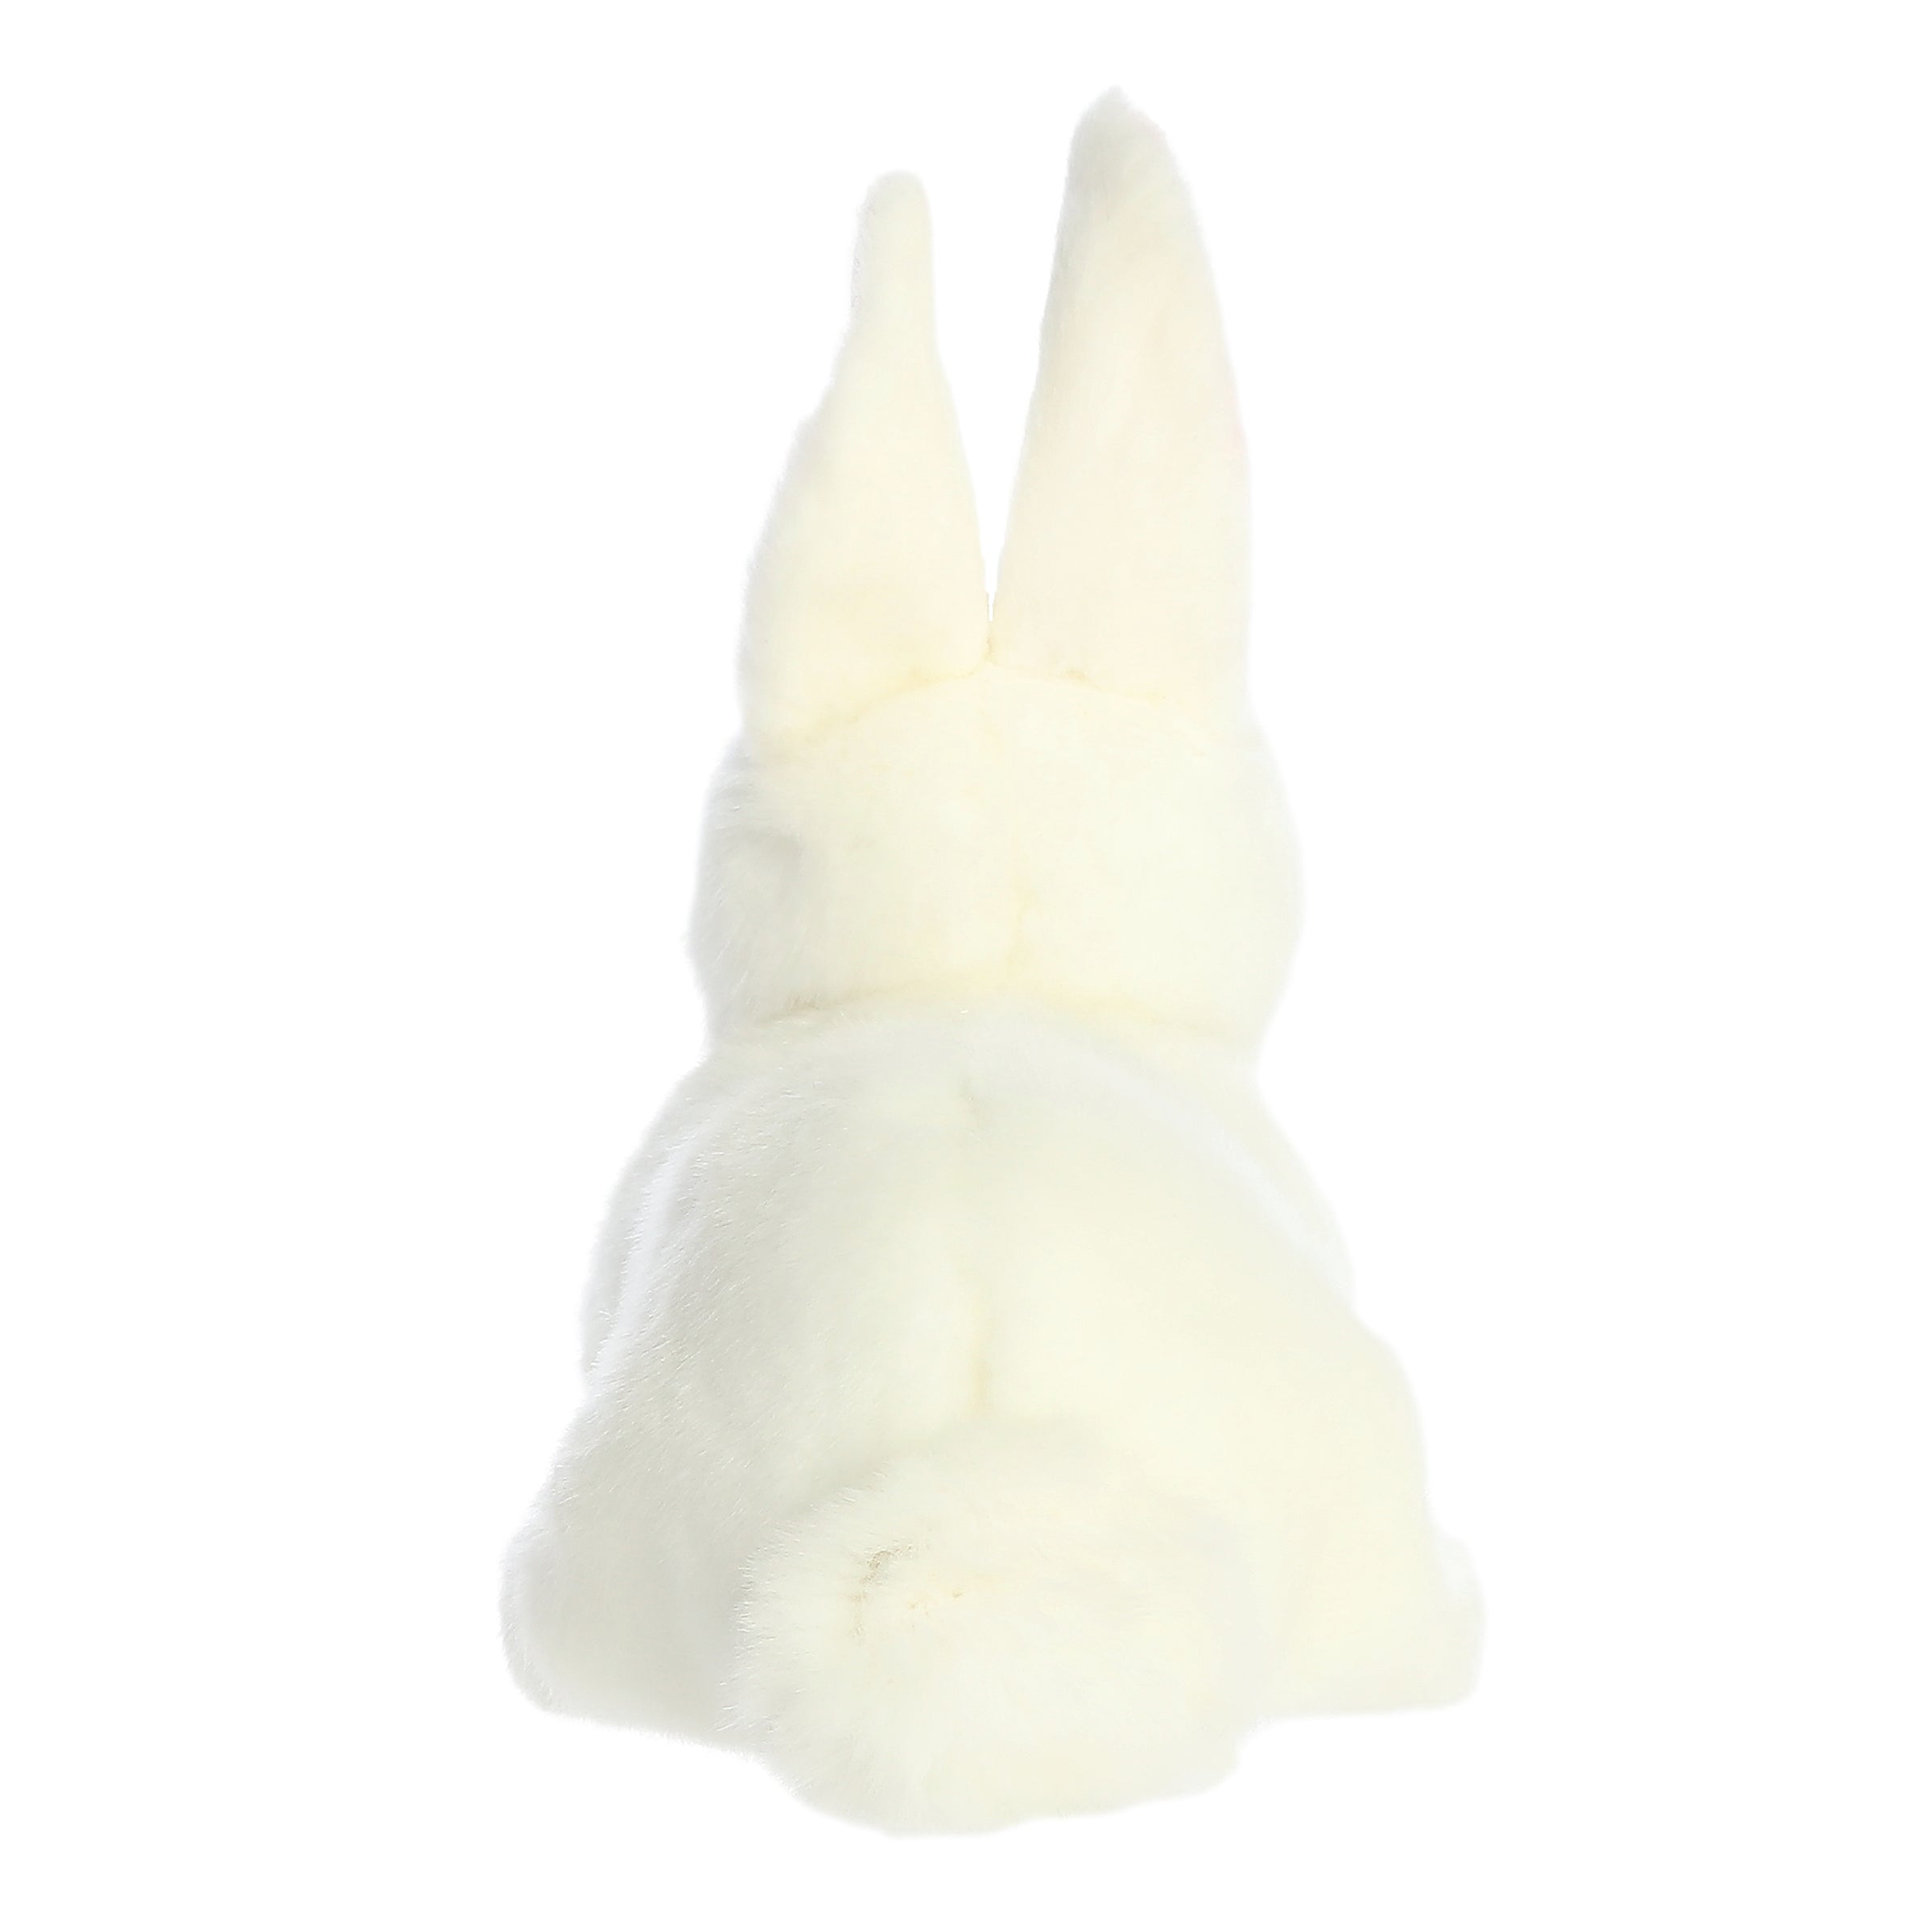 Aurora® - Miyoni® - American White Rabbit